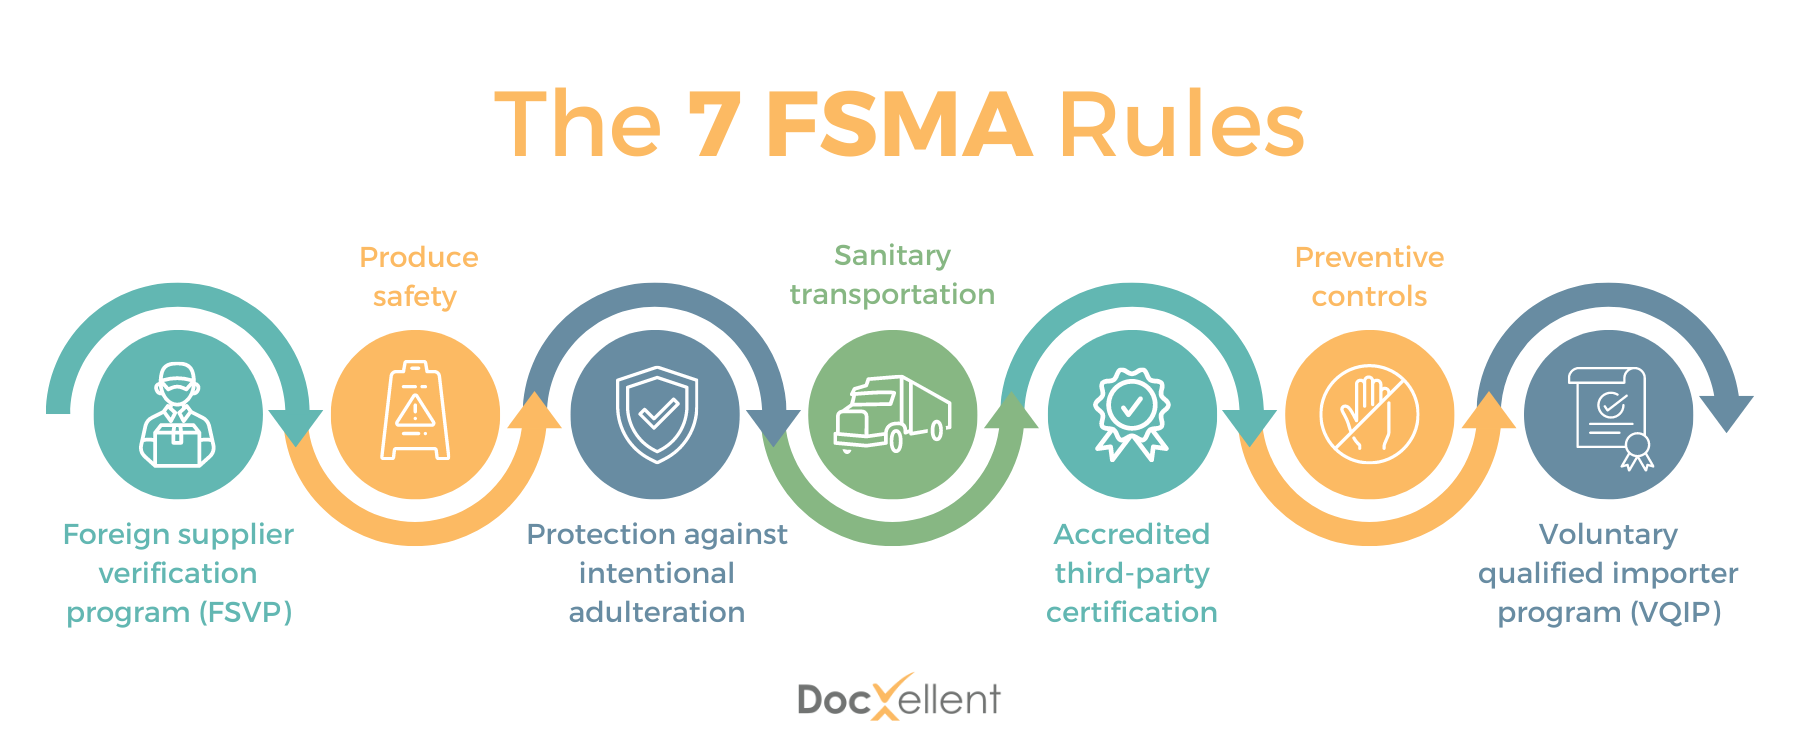 The 7 FSMA Rules